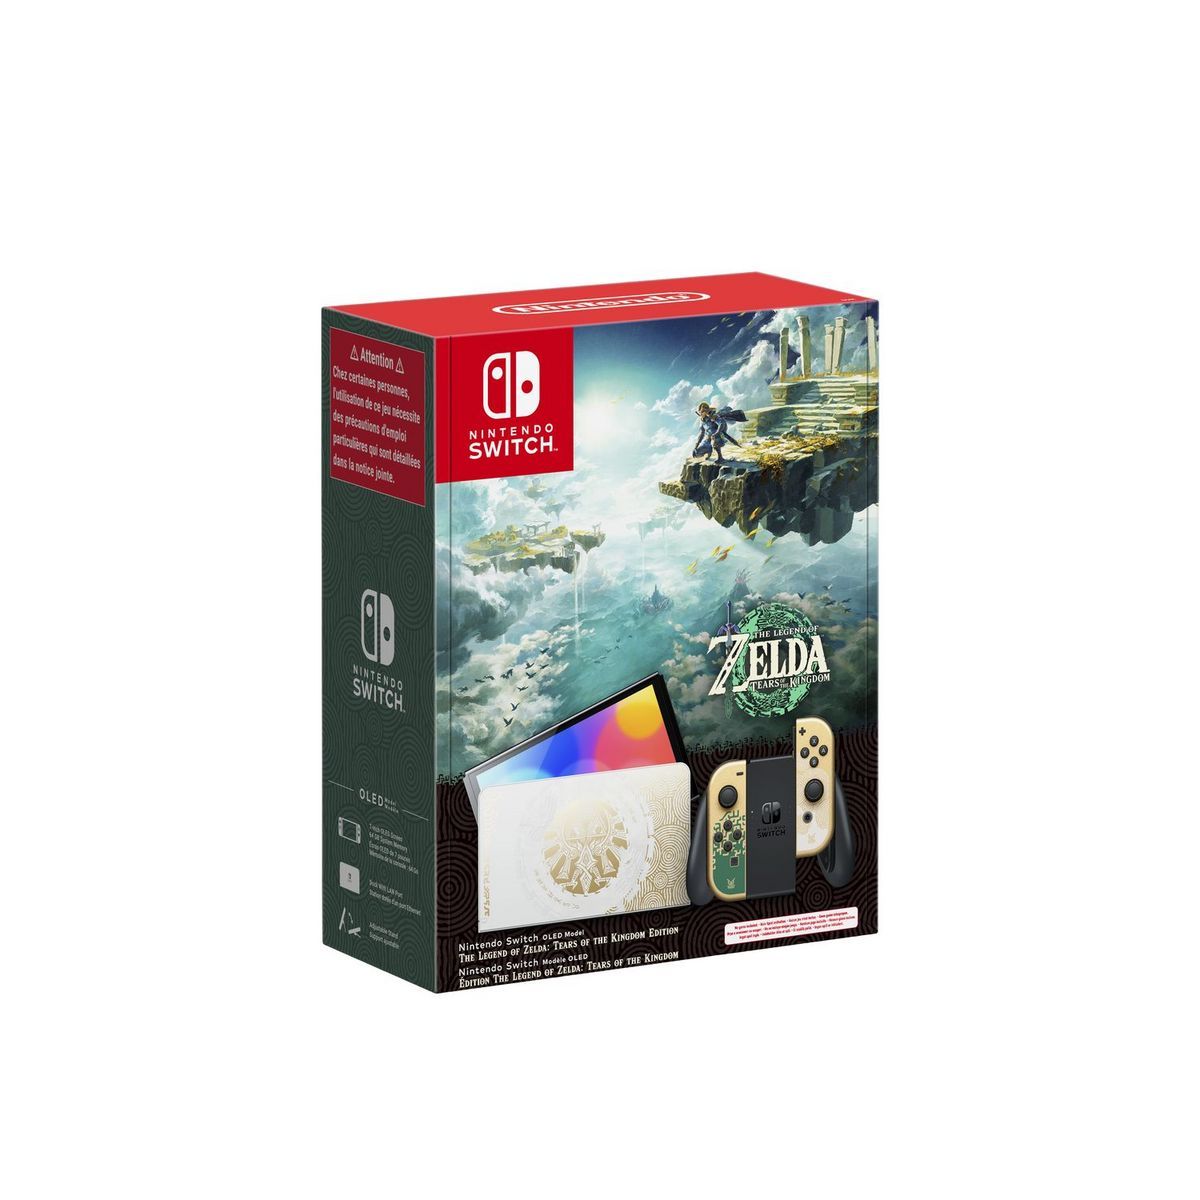 Existe : - La console Switch Oled The Legend of Zelda : Tears of the Kingdom, édition limitée